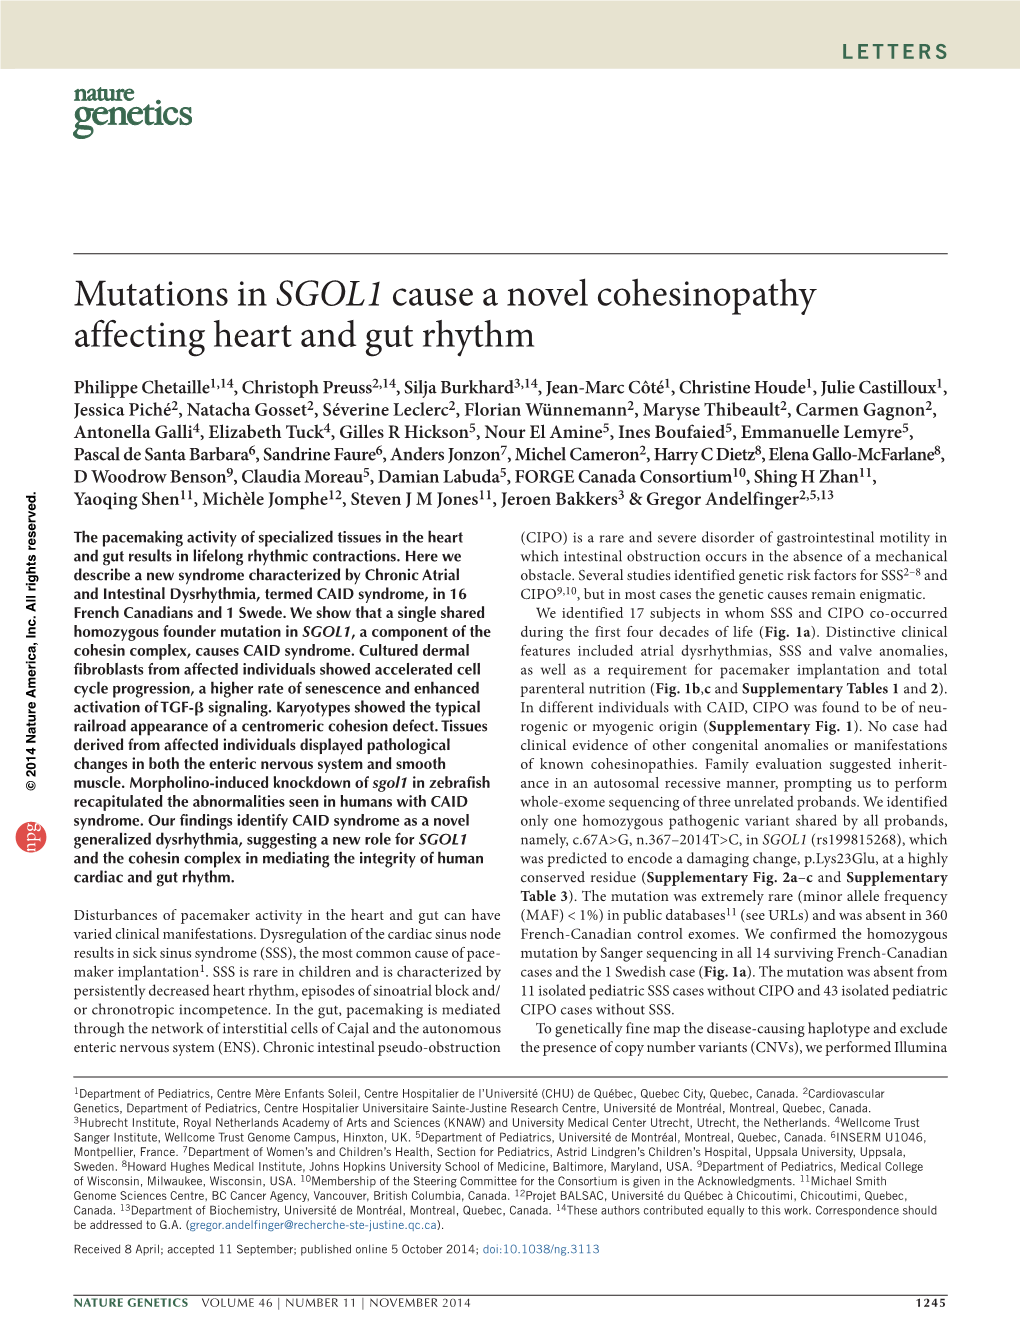 Mutations in SGOL1 Cause a Novel Cohesinopathy Affecting Heart and Gut Rhythm